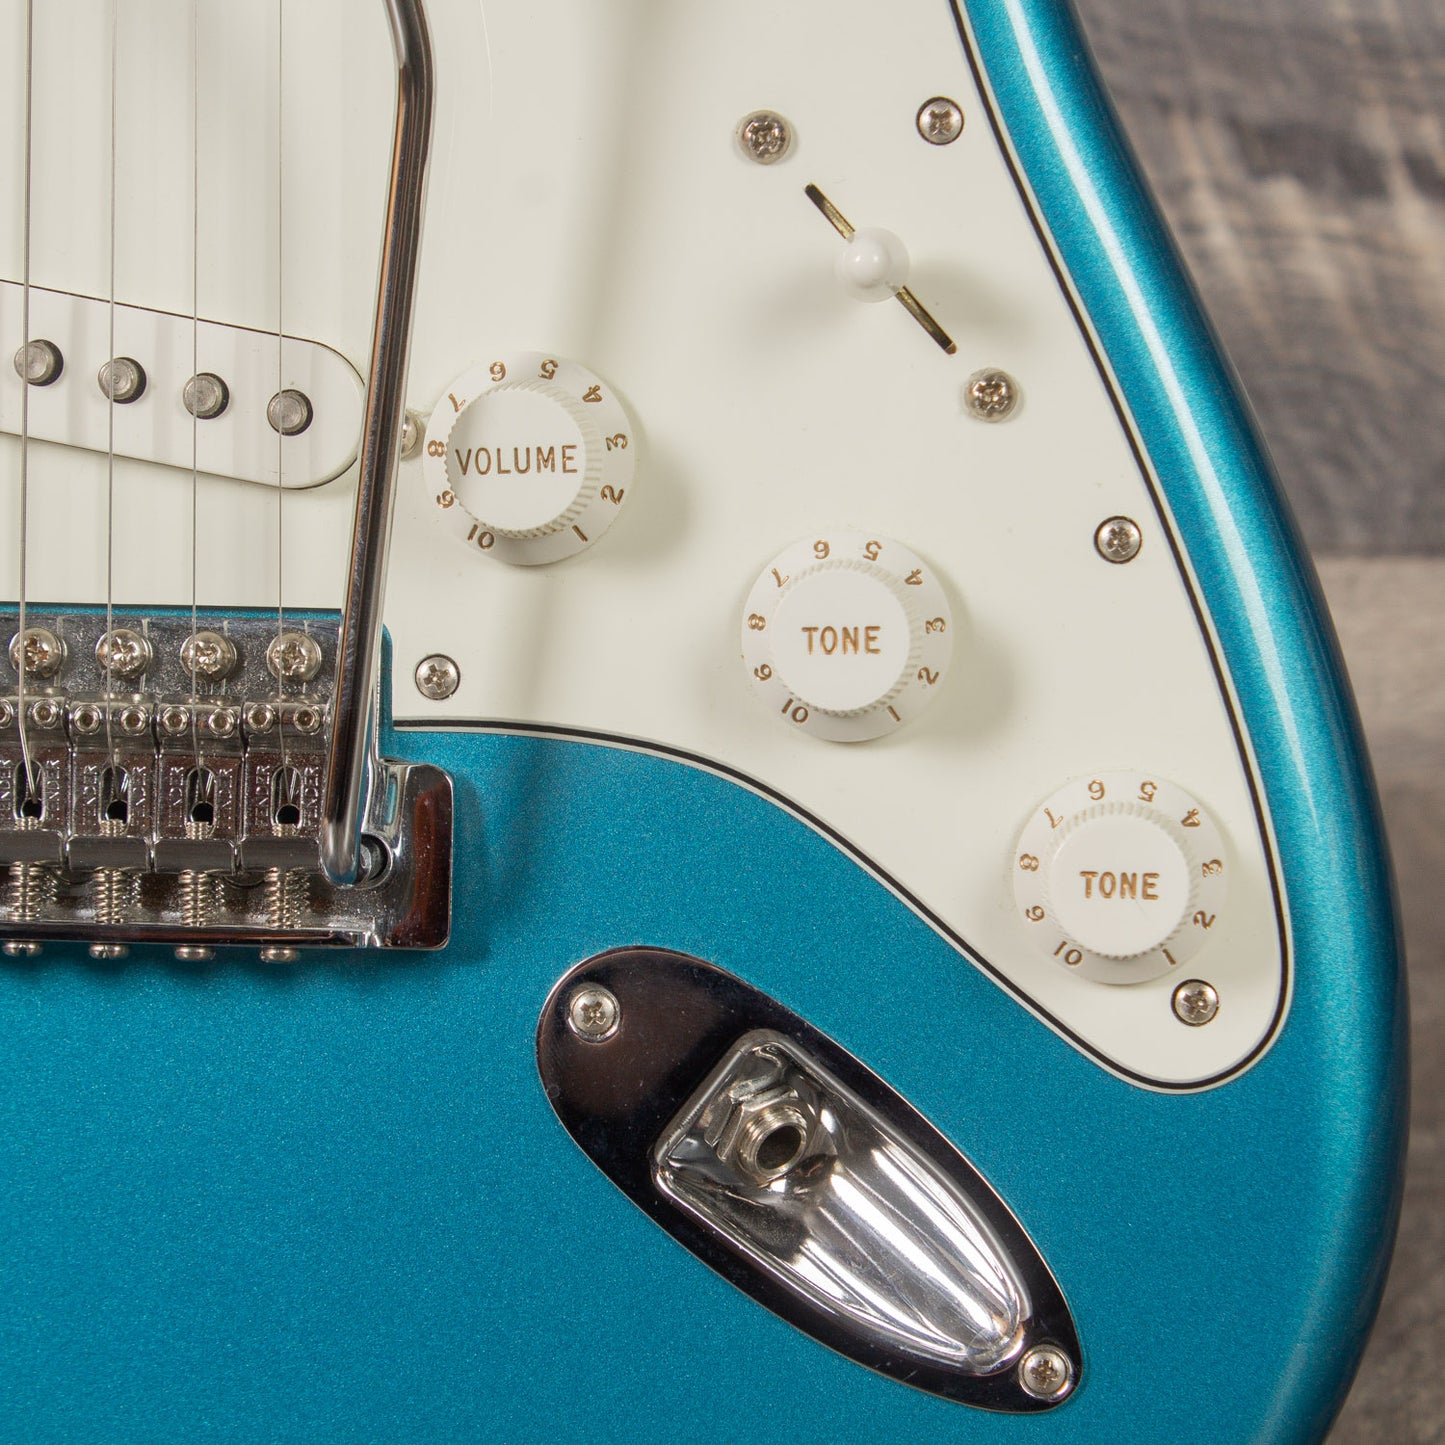 2017 Fender Standard Stratocaster - Lake Placid Blue